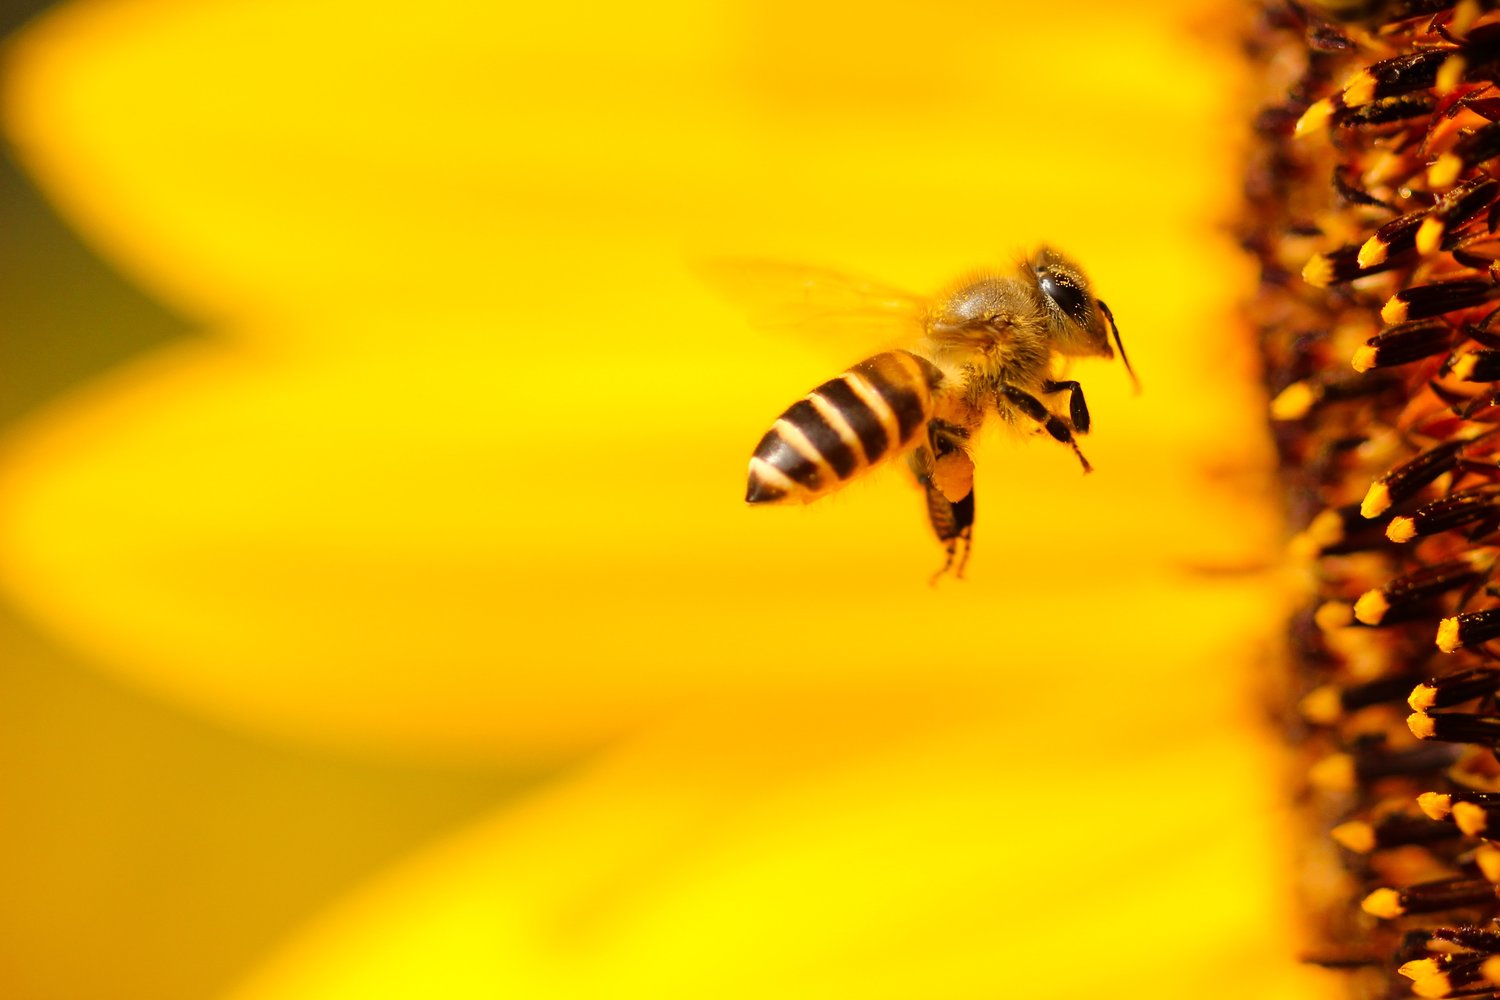 Honey bee: a Vital Pollinator and Garden Guest